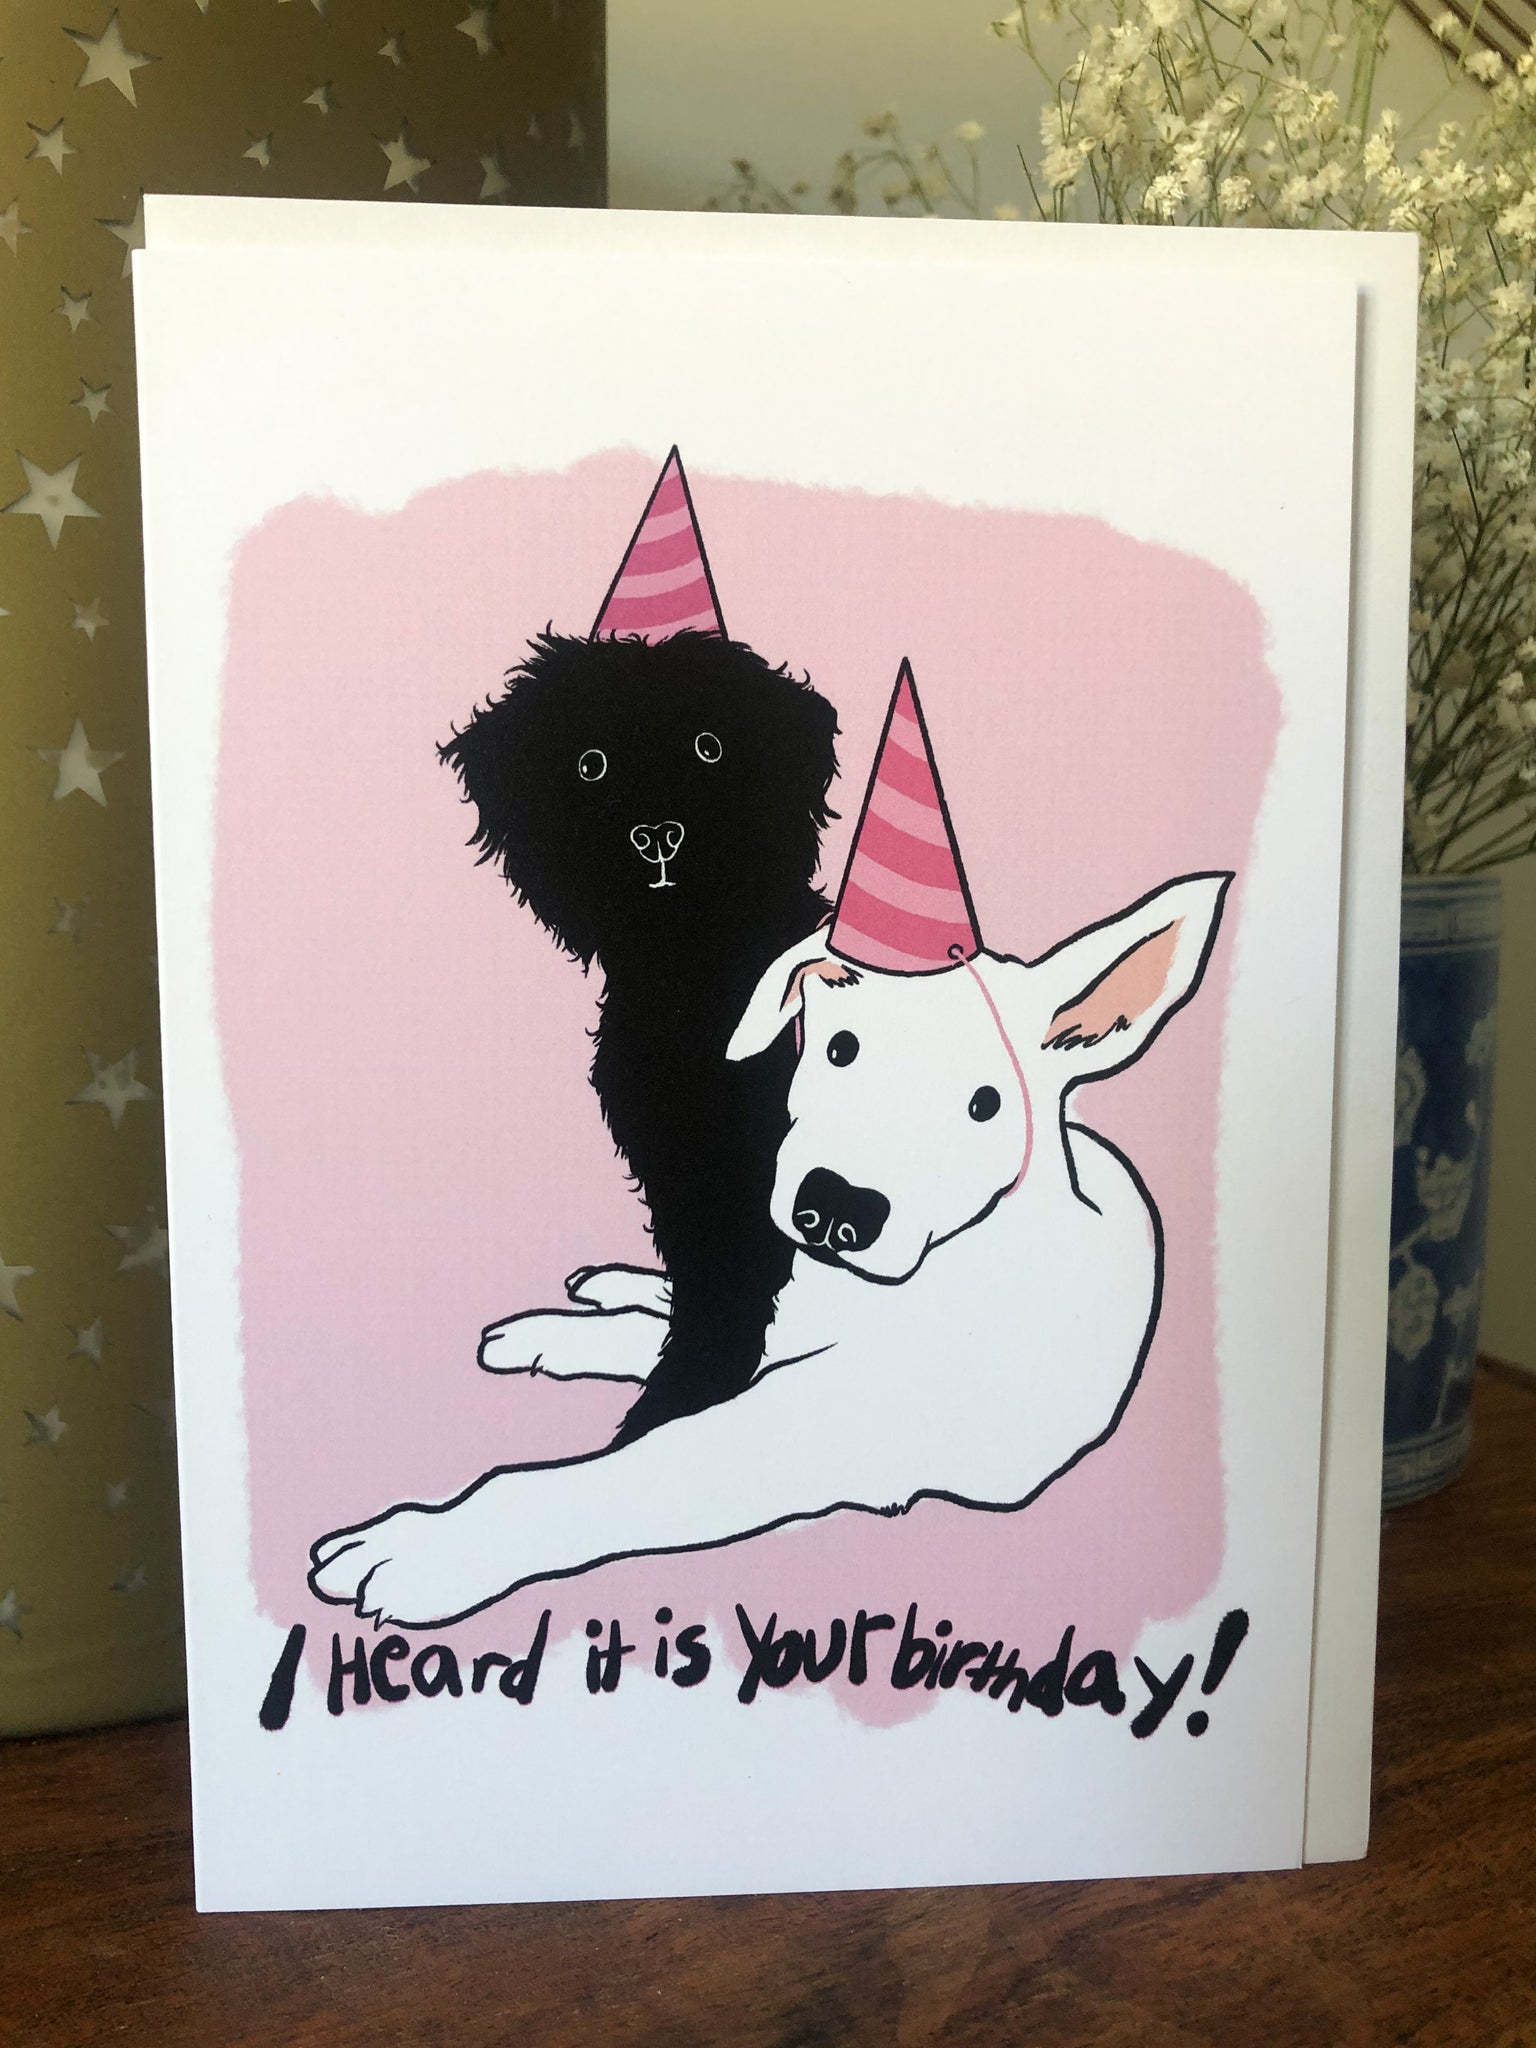 "I heard it is your birthday!" Card